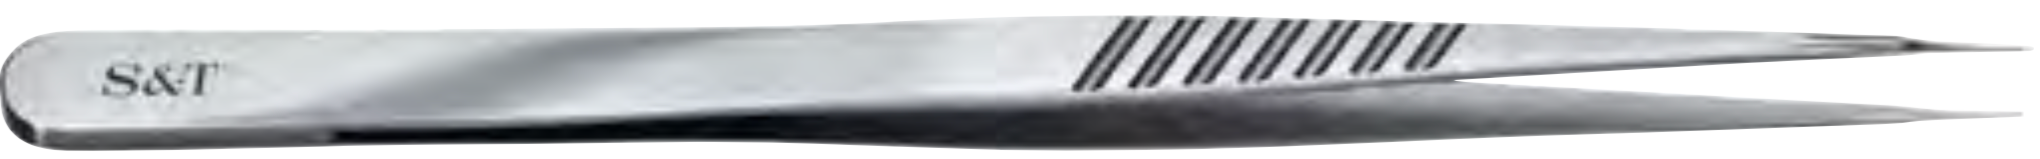 S&T Vessel Dilator 13.5cm JFS-3d.2 Flat Handle 0.2mm Straight Tips